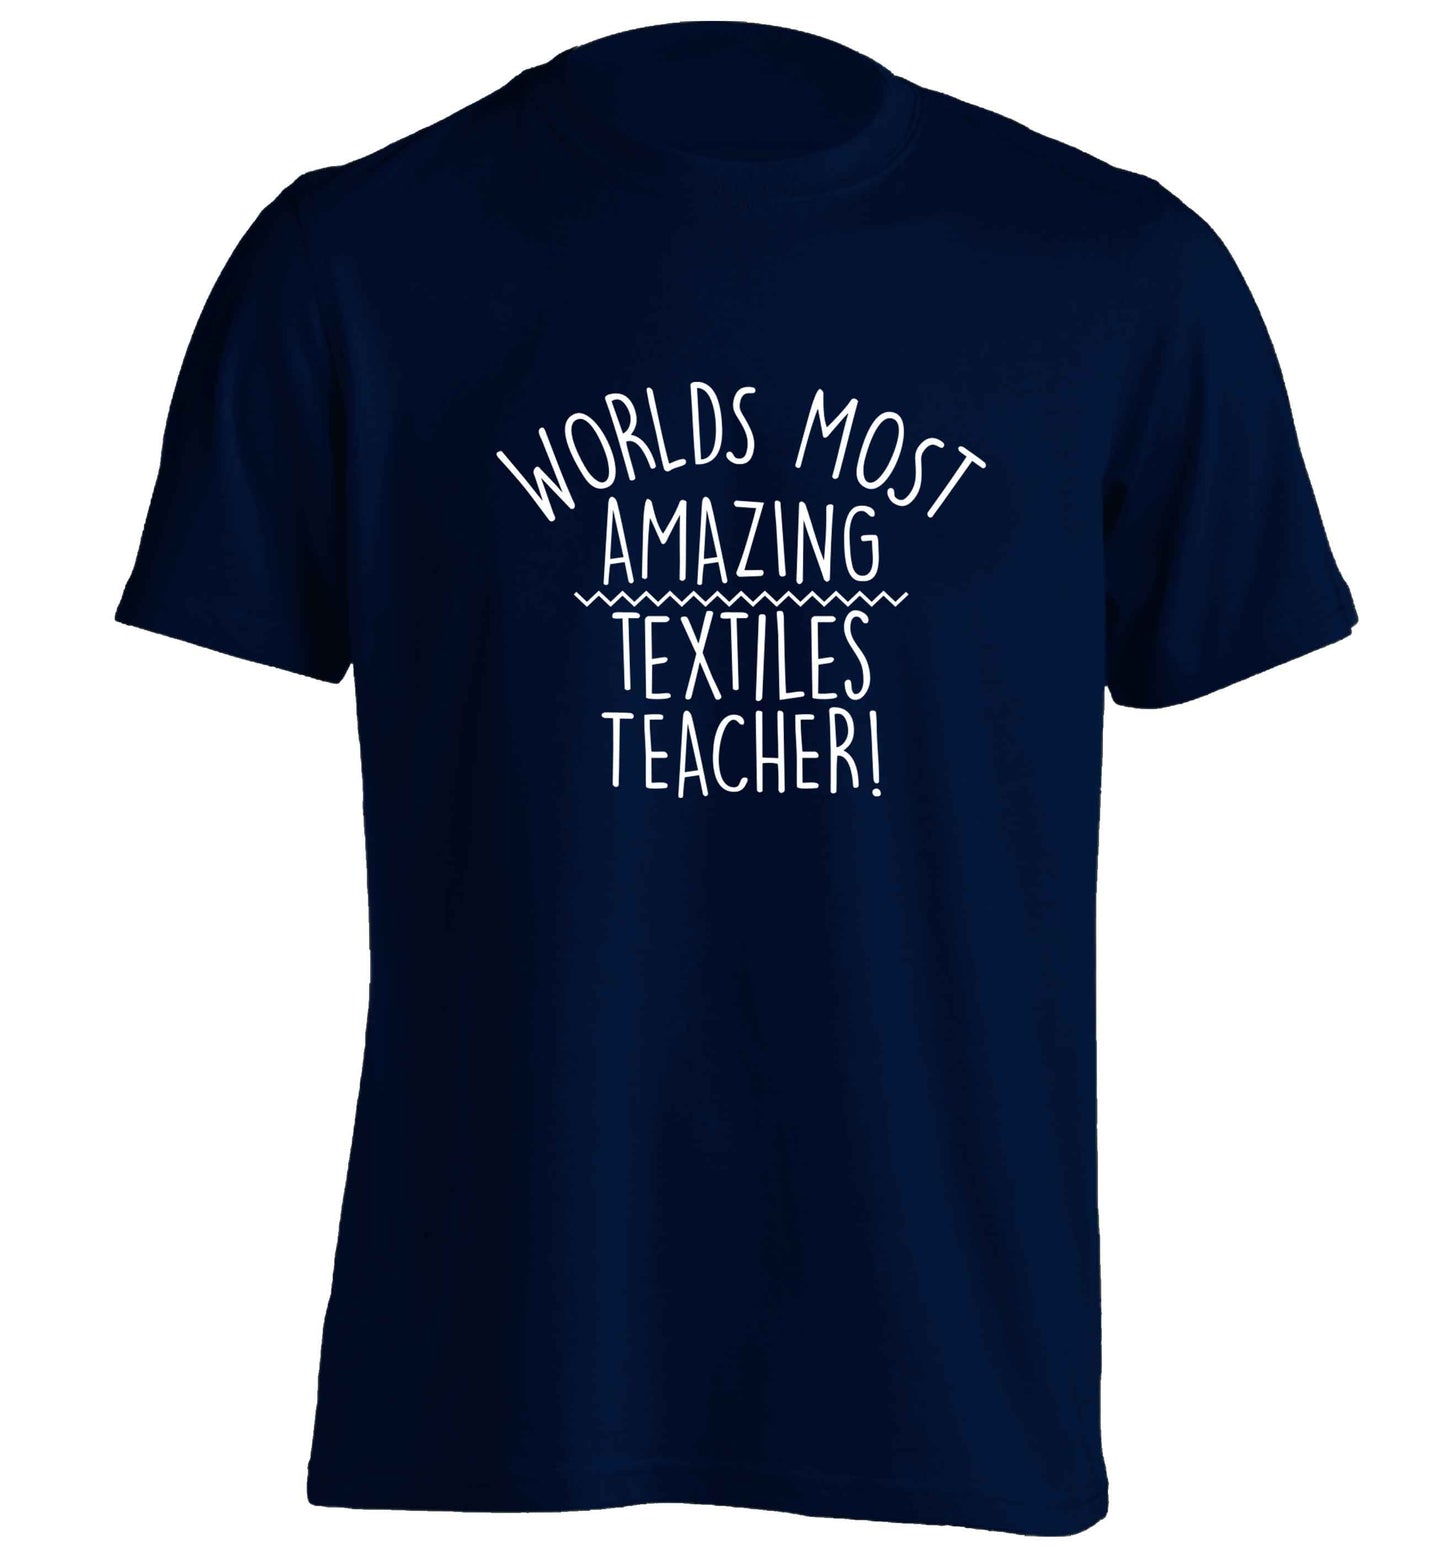 Worlds most amazing textiles teacher adults unisex navy Tshirt 2XL